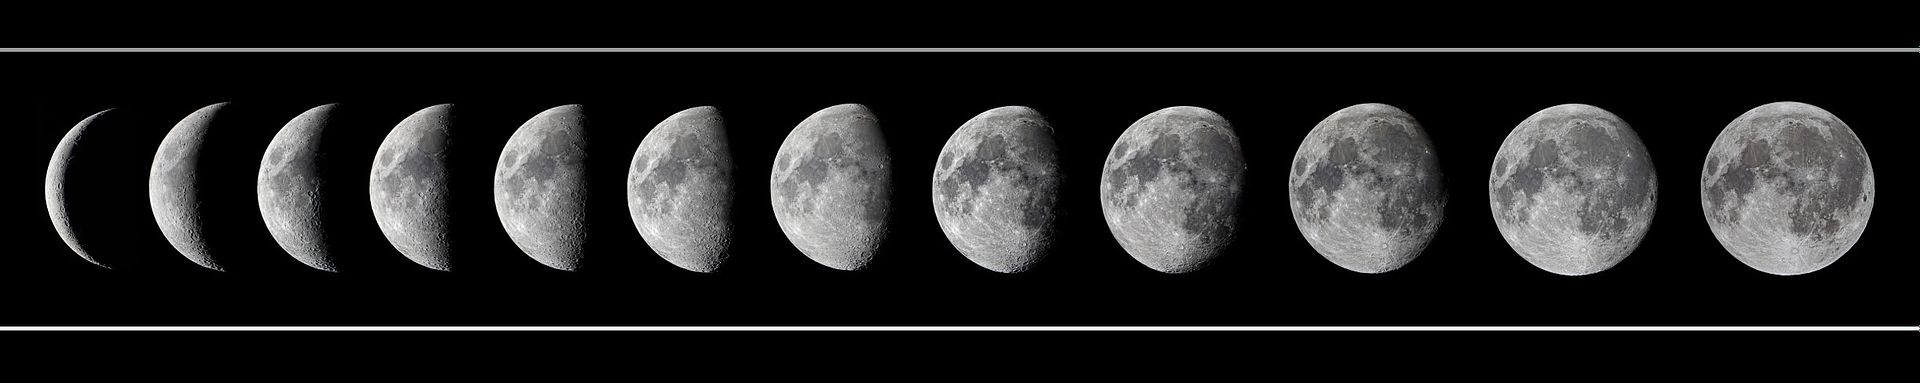 moon-phases-january-2012_flat_small.jpg